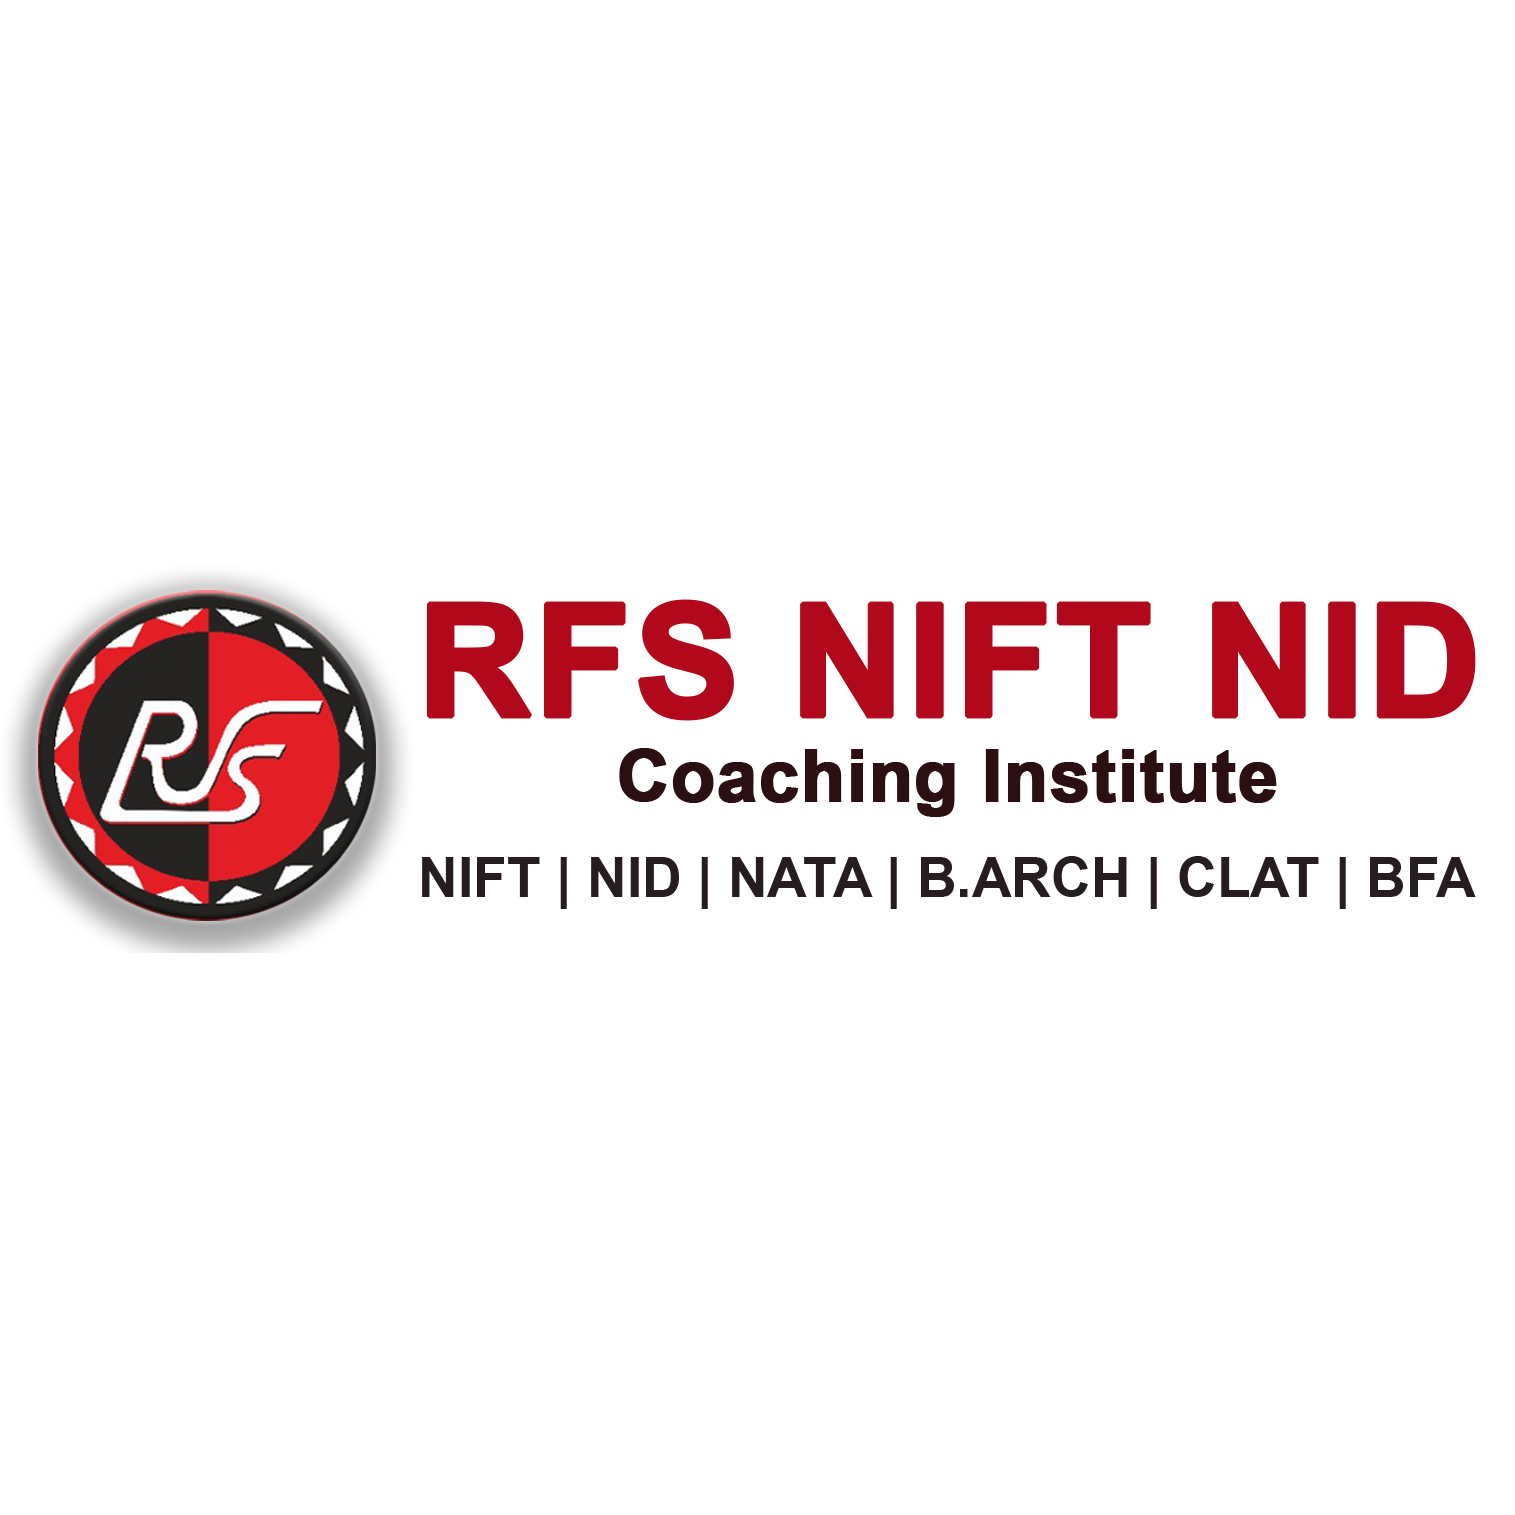 RFS NIFT NID Coaching Institute